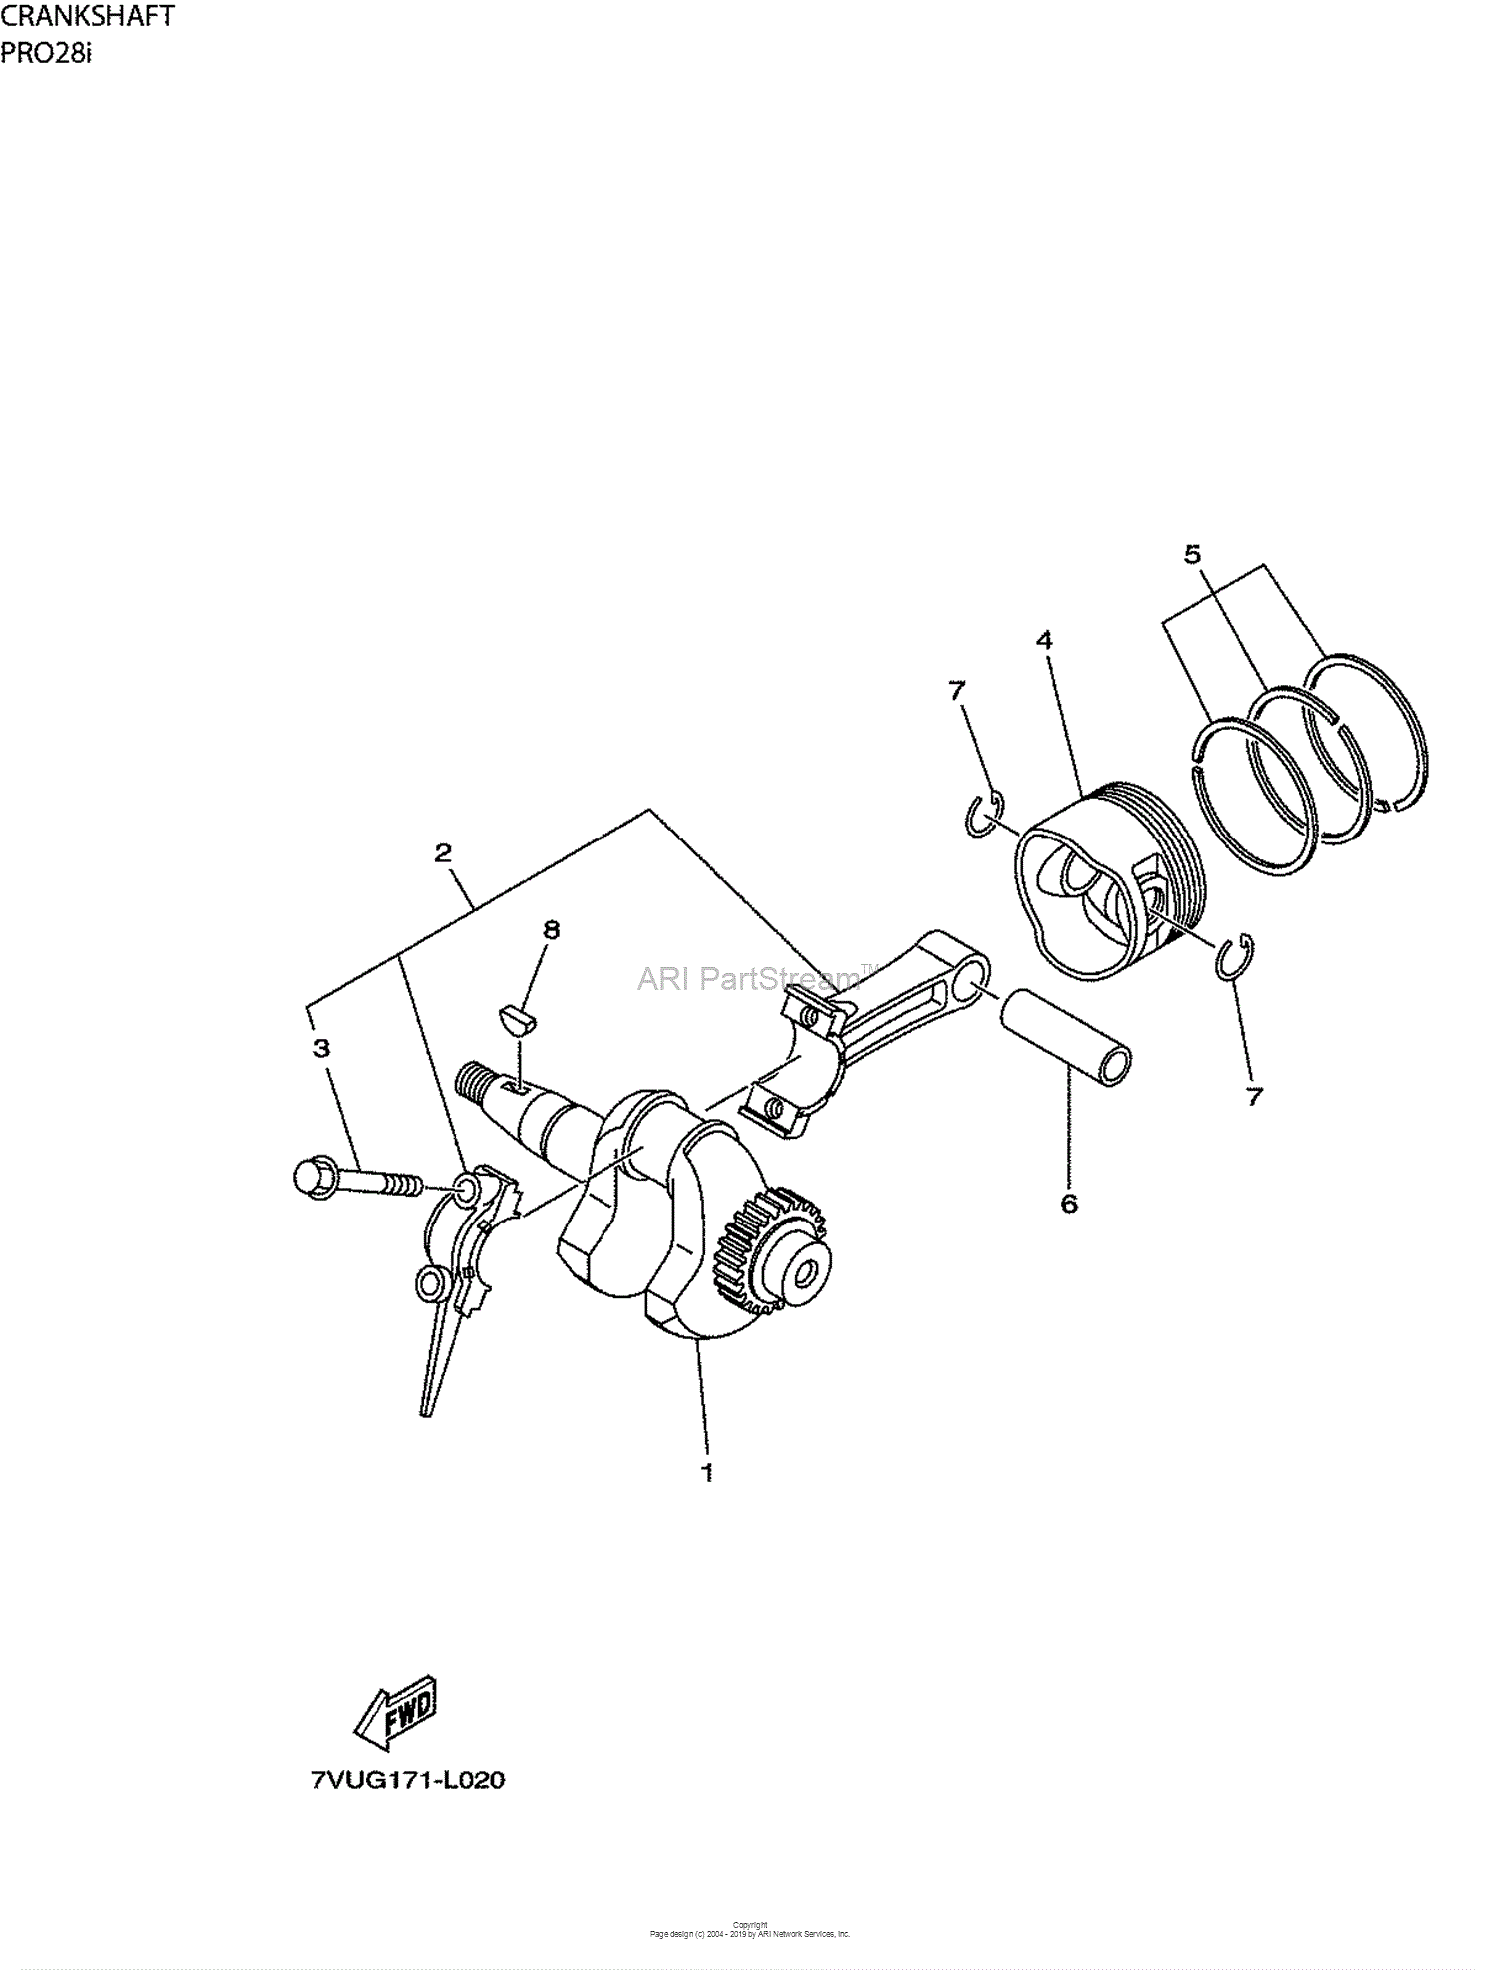 Kohler CH23-76513 23 HP (17.2 KW) Parts Diagram for Crankshaft